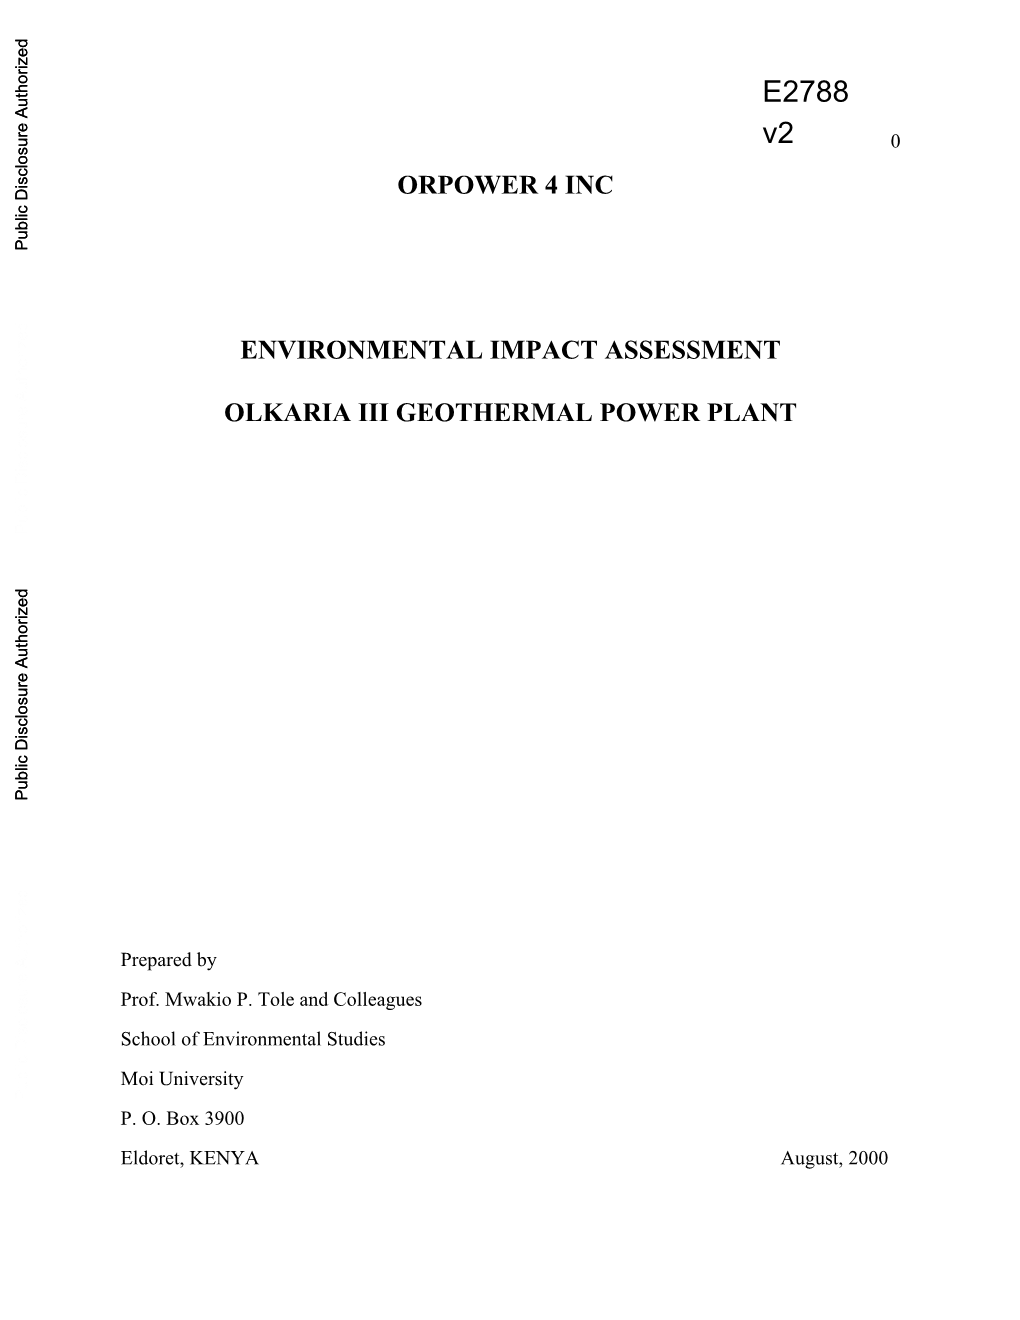 Orpower 4 Inc Environmental Impact Assessment Olkaria Iii Geothermal